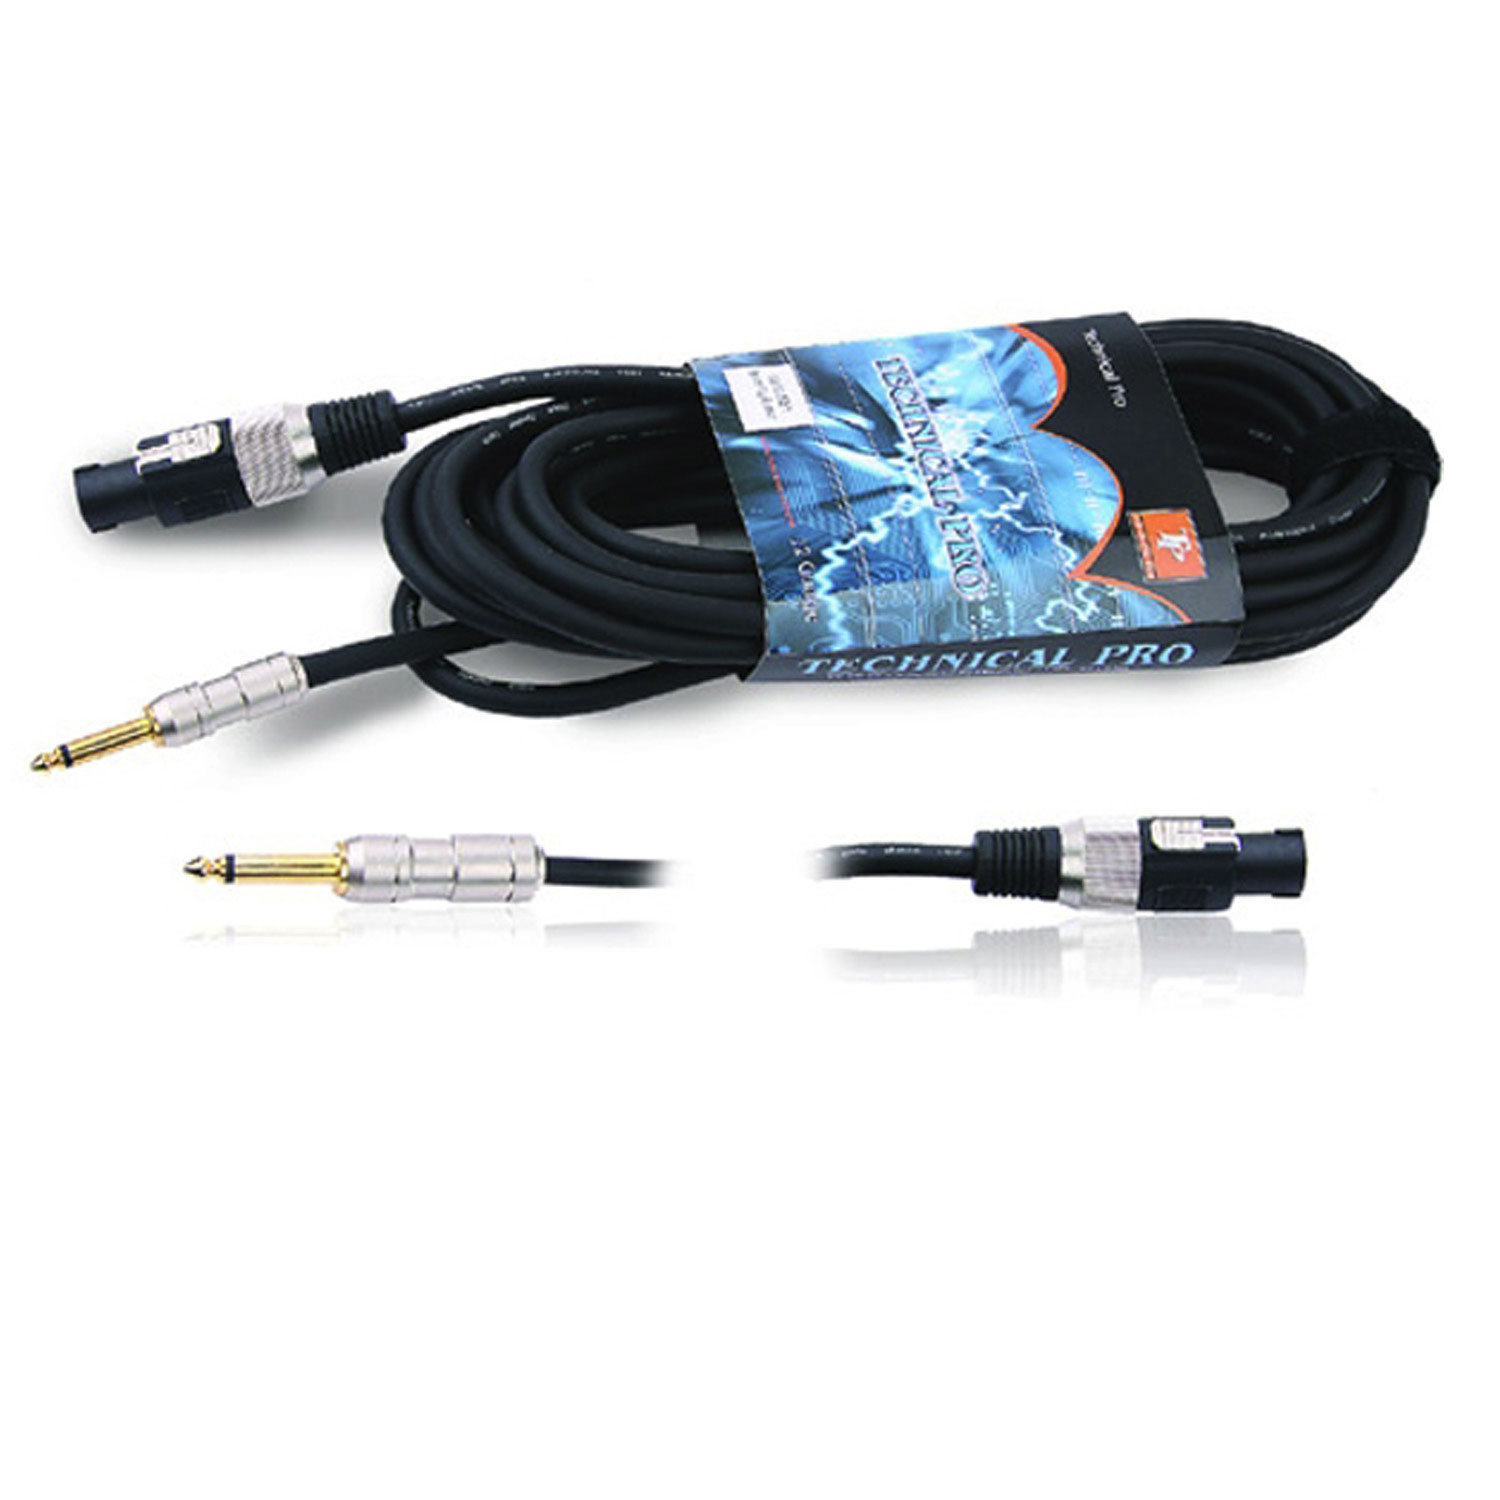 Technical Pro 50' Foot 12 Gauge 1/4'' to Speakon Pro Audio Speaker Cable